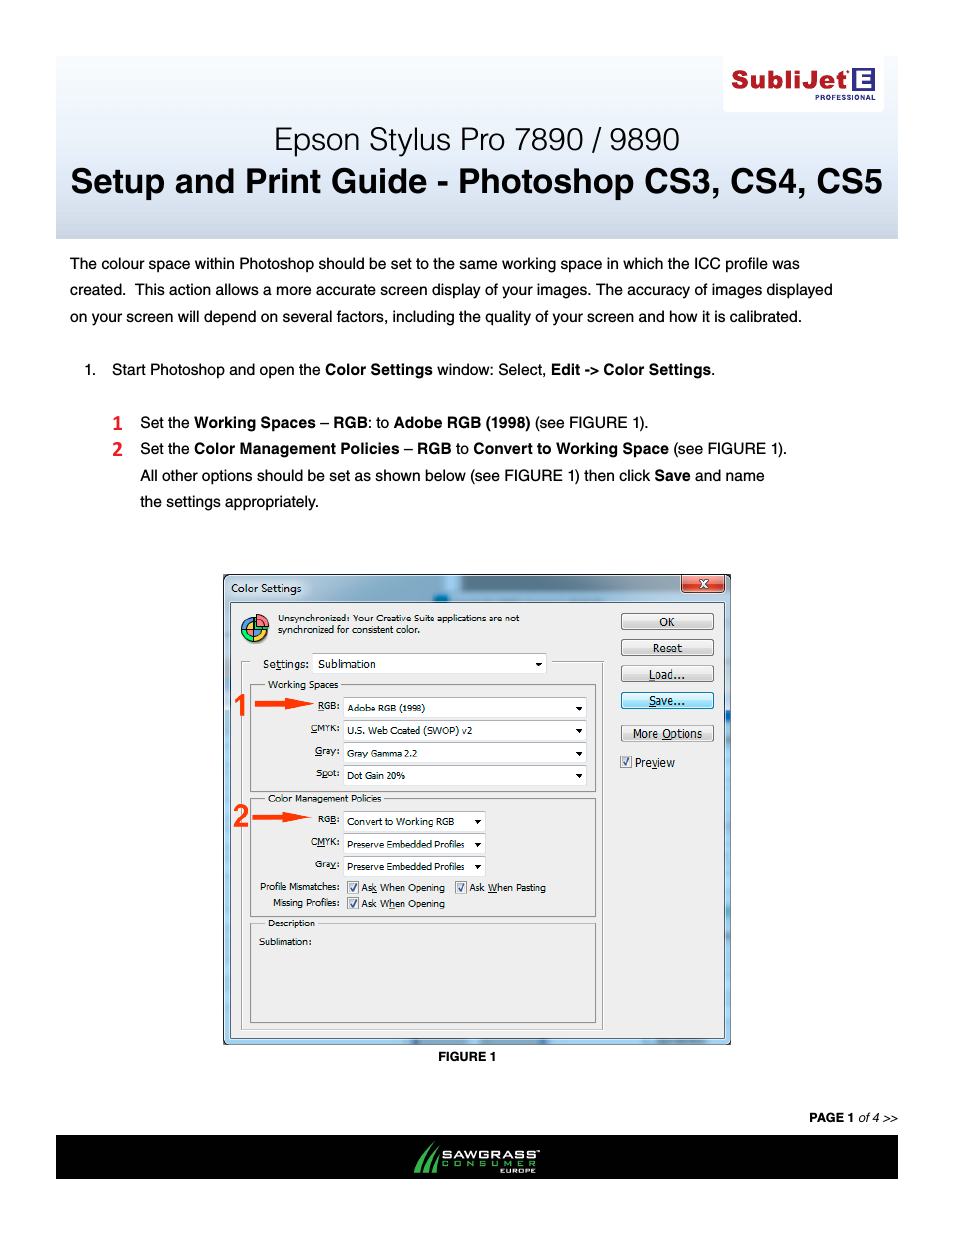 SubliJet E Epson Stylus Pro 9890 (Windows ICC Profile Setup): Print & Setup Guide Photoshop CS3 - CS5